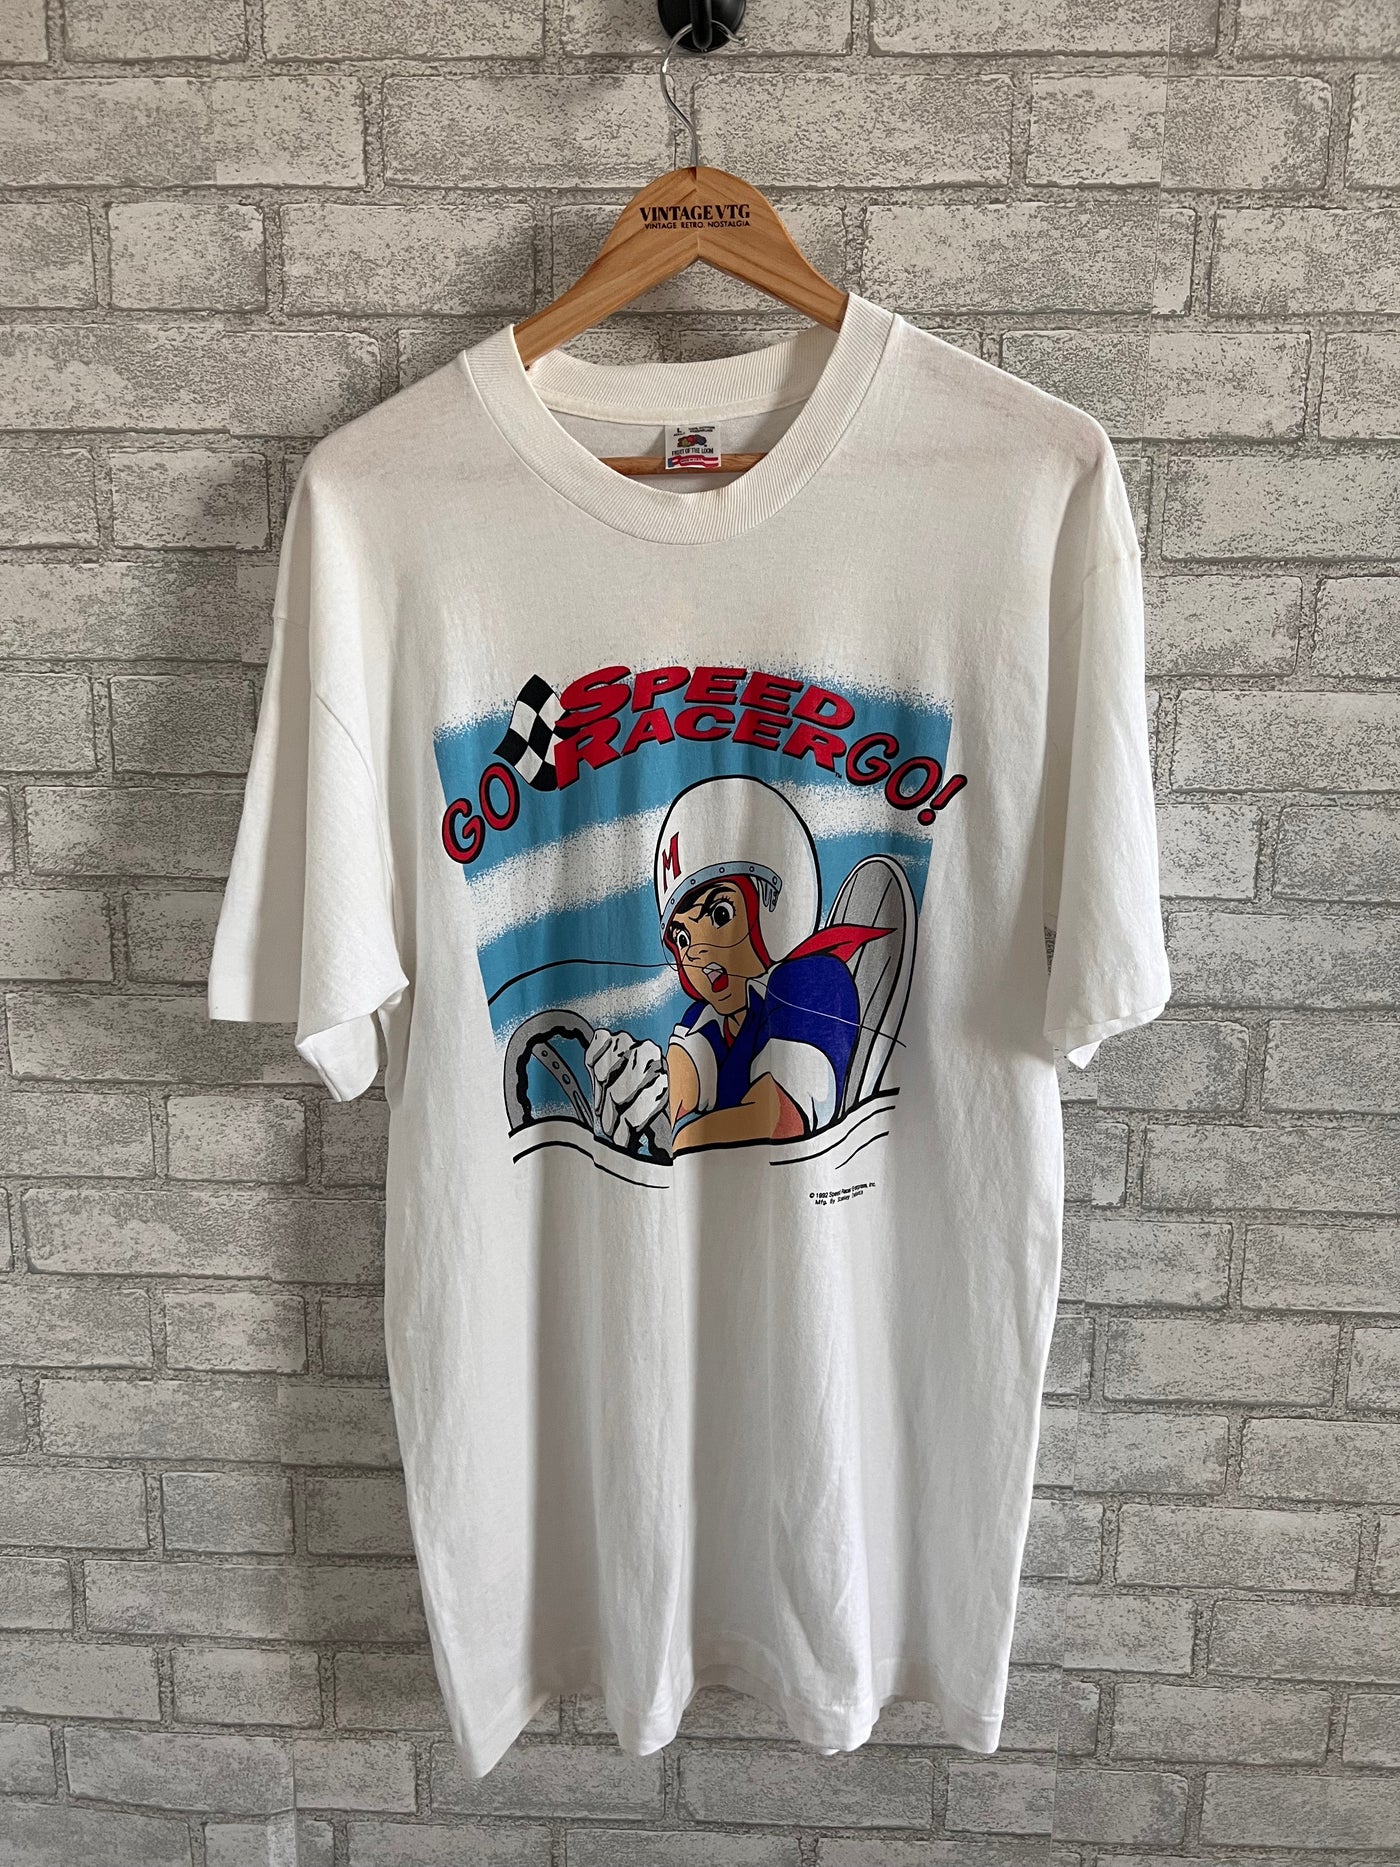 Rare Vintage 1992 Stanley Desantis Go Speed Racer Go Shirt. Large